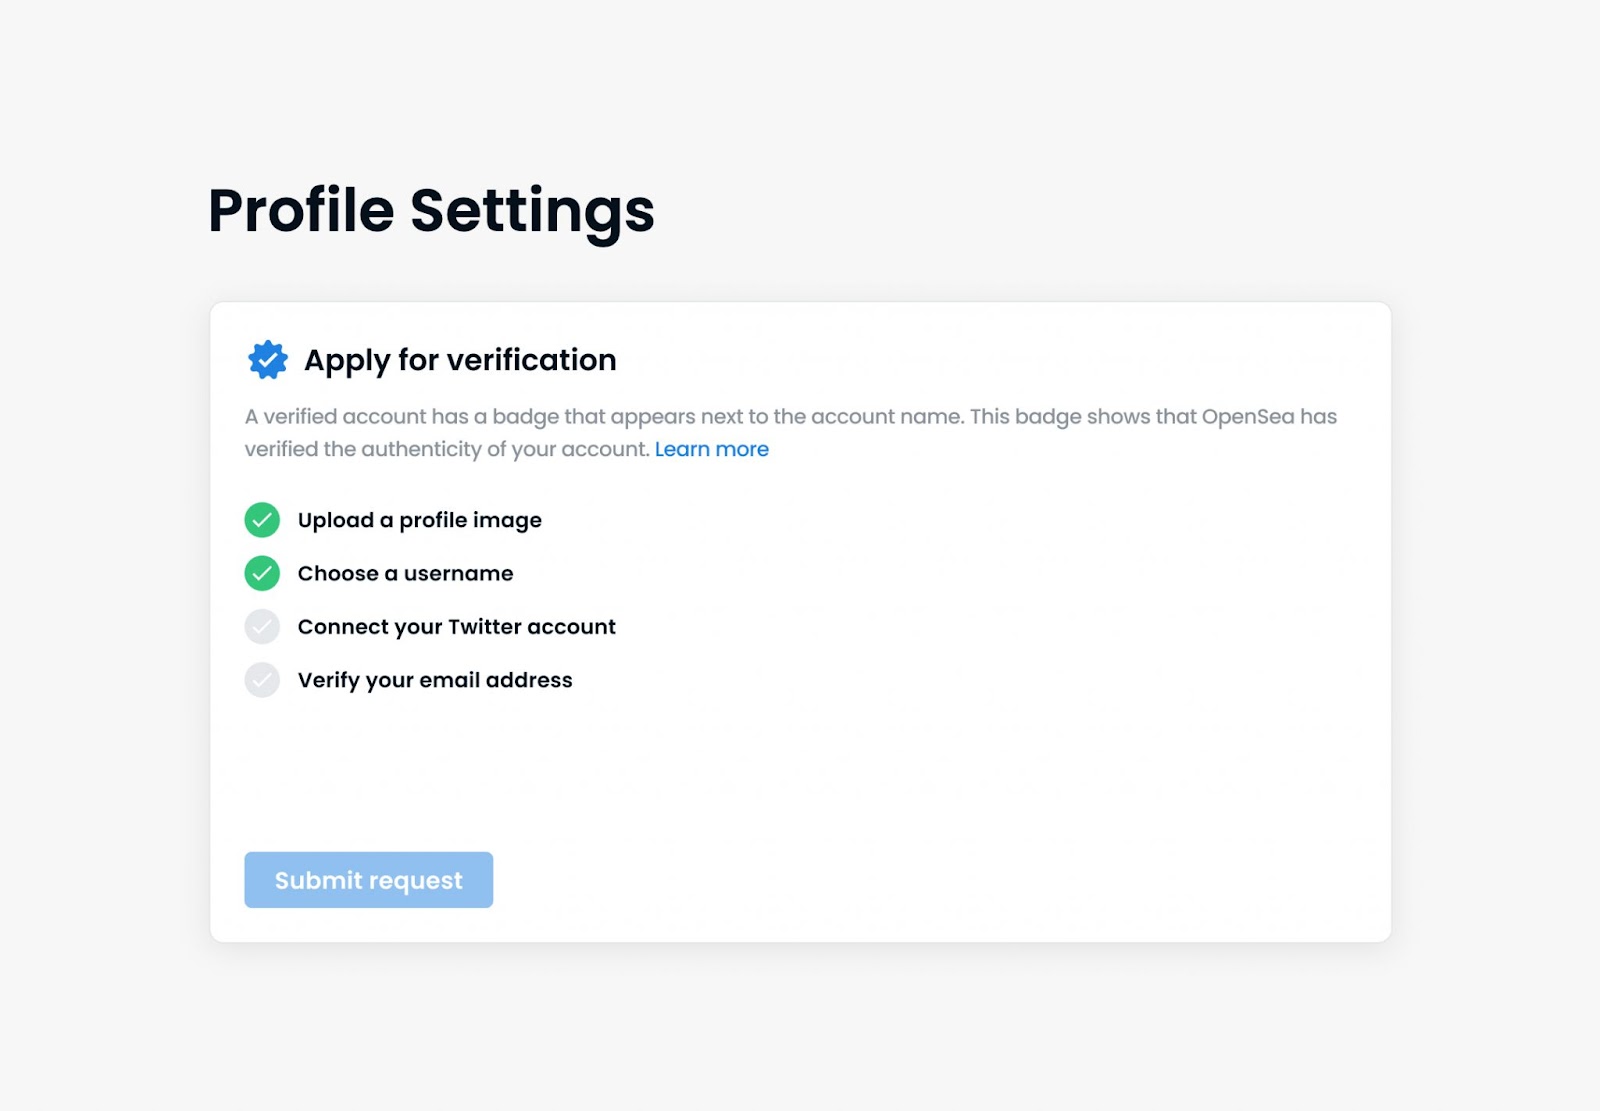 Profile Settings Of OpenseaStep 2 To Get Verified On Opensea